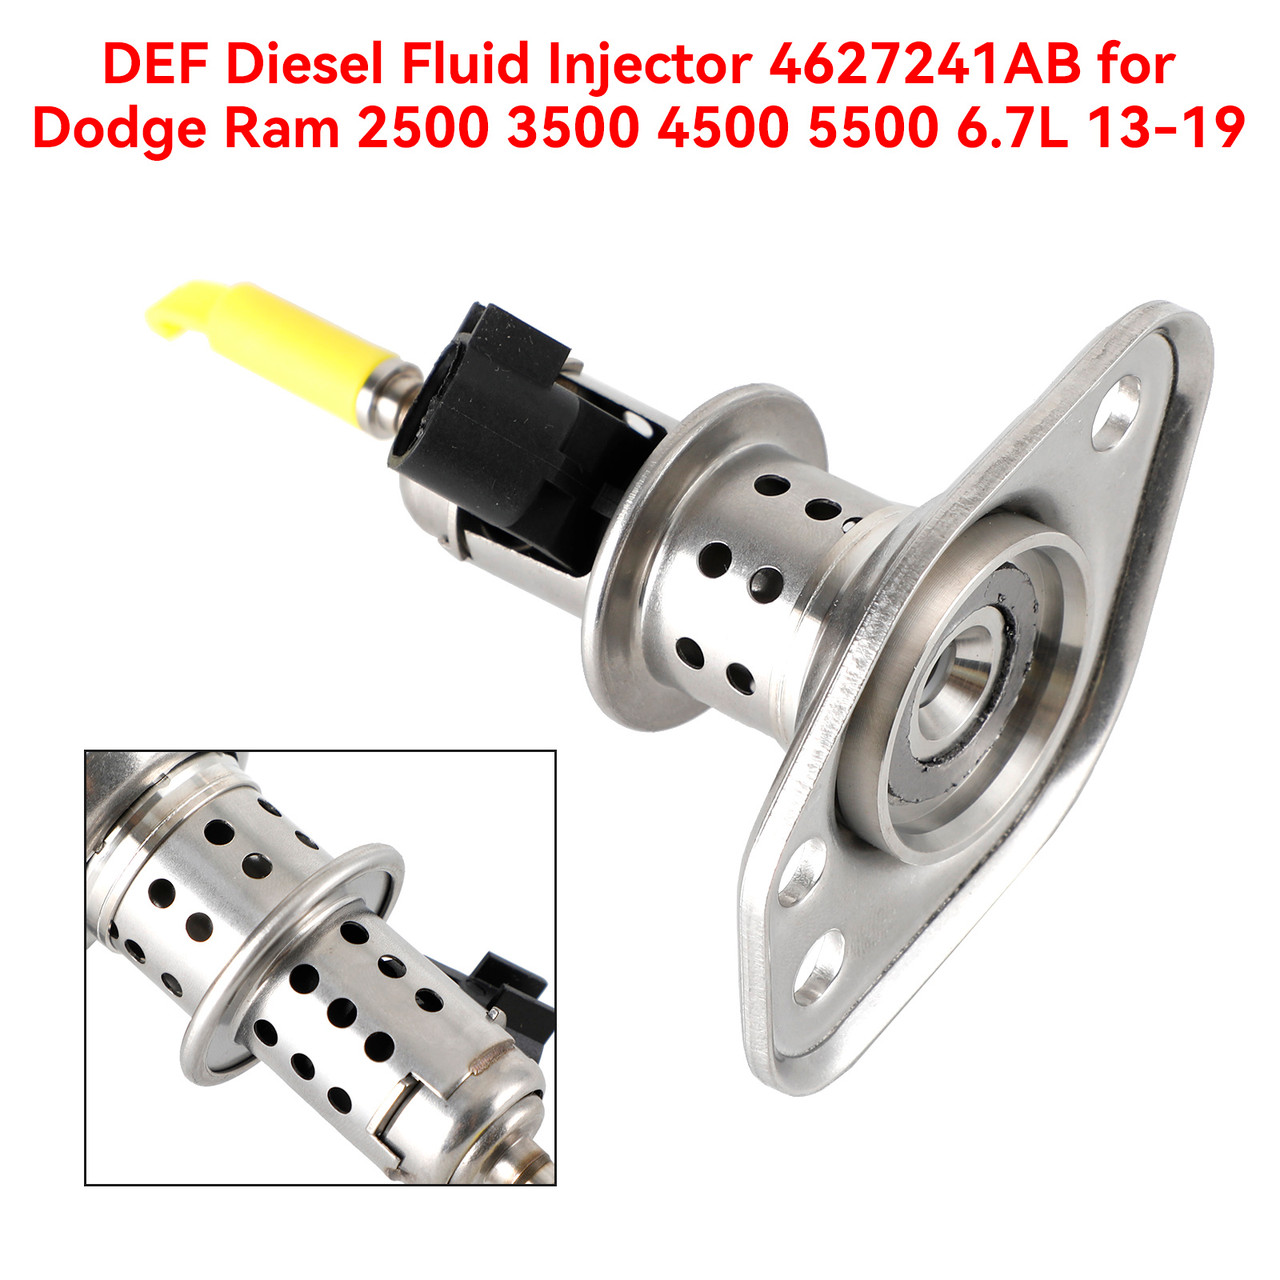 DEF Diesel Fluid Injector 4627241AB Dodge Ram 2500 3500 4500 5500 6.7L 13-19